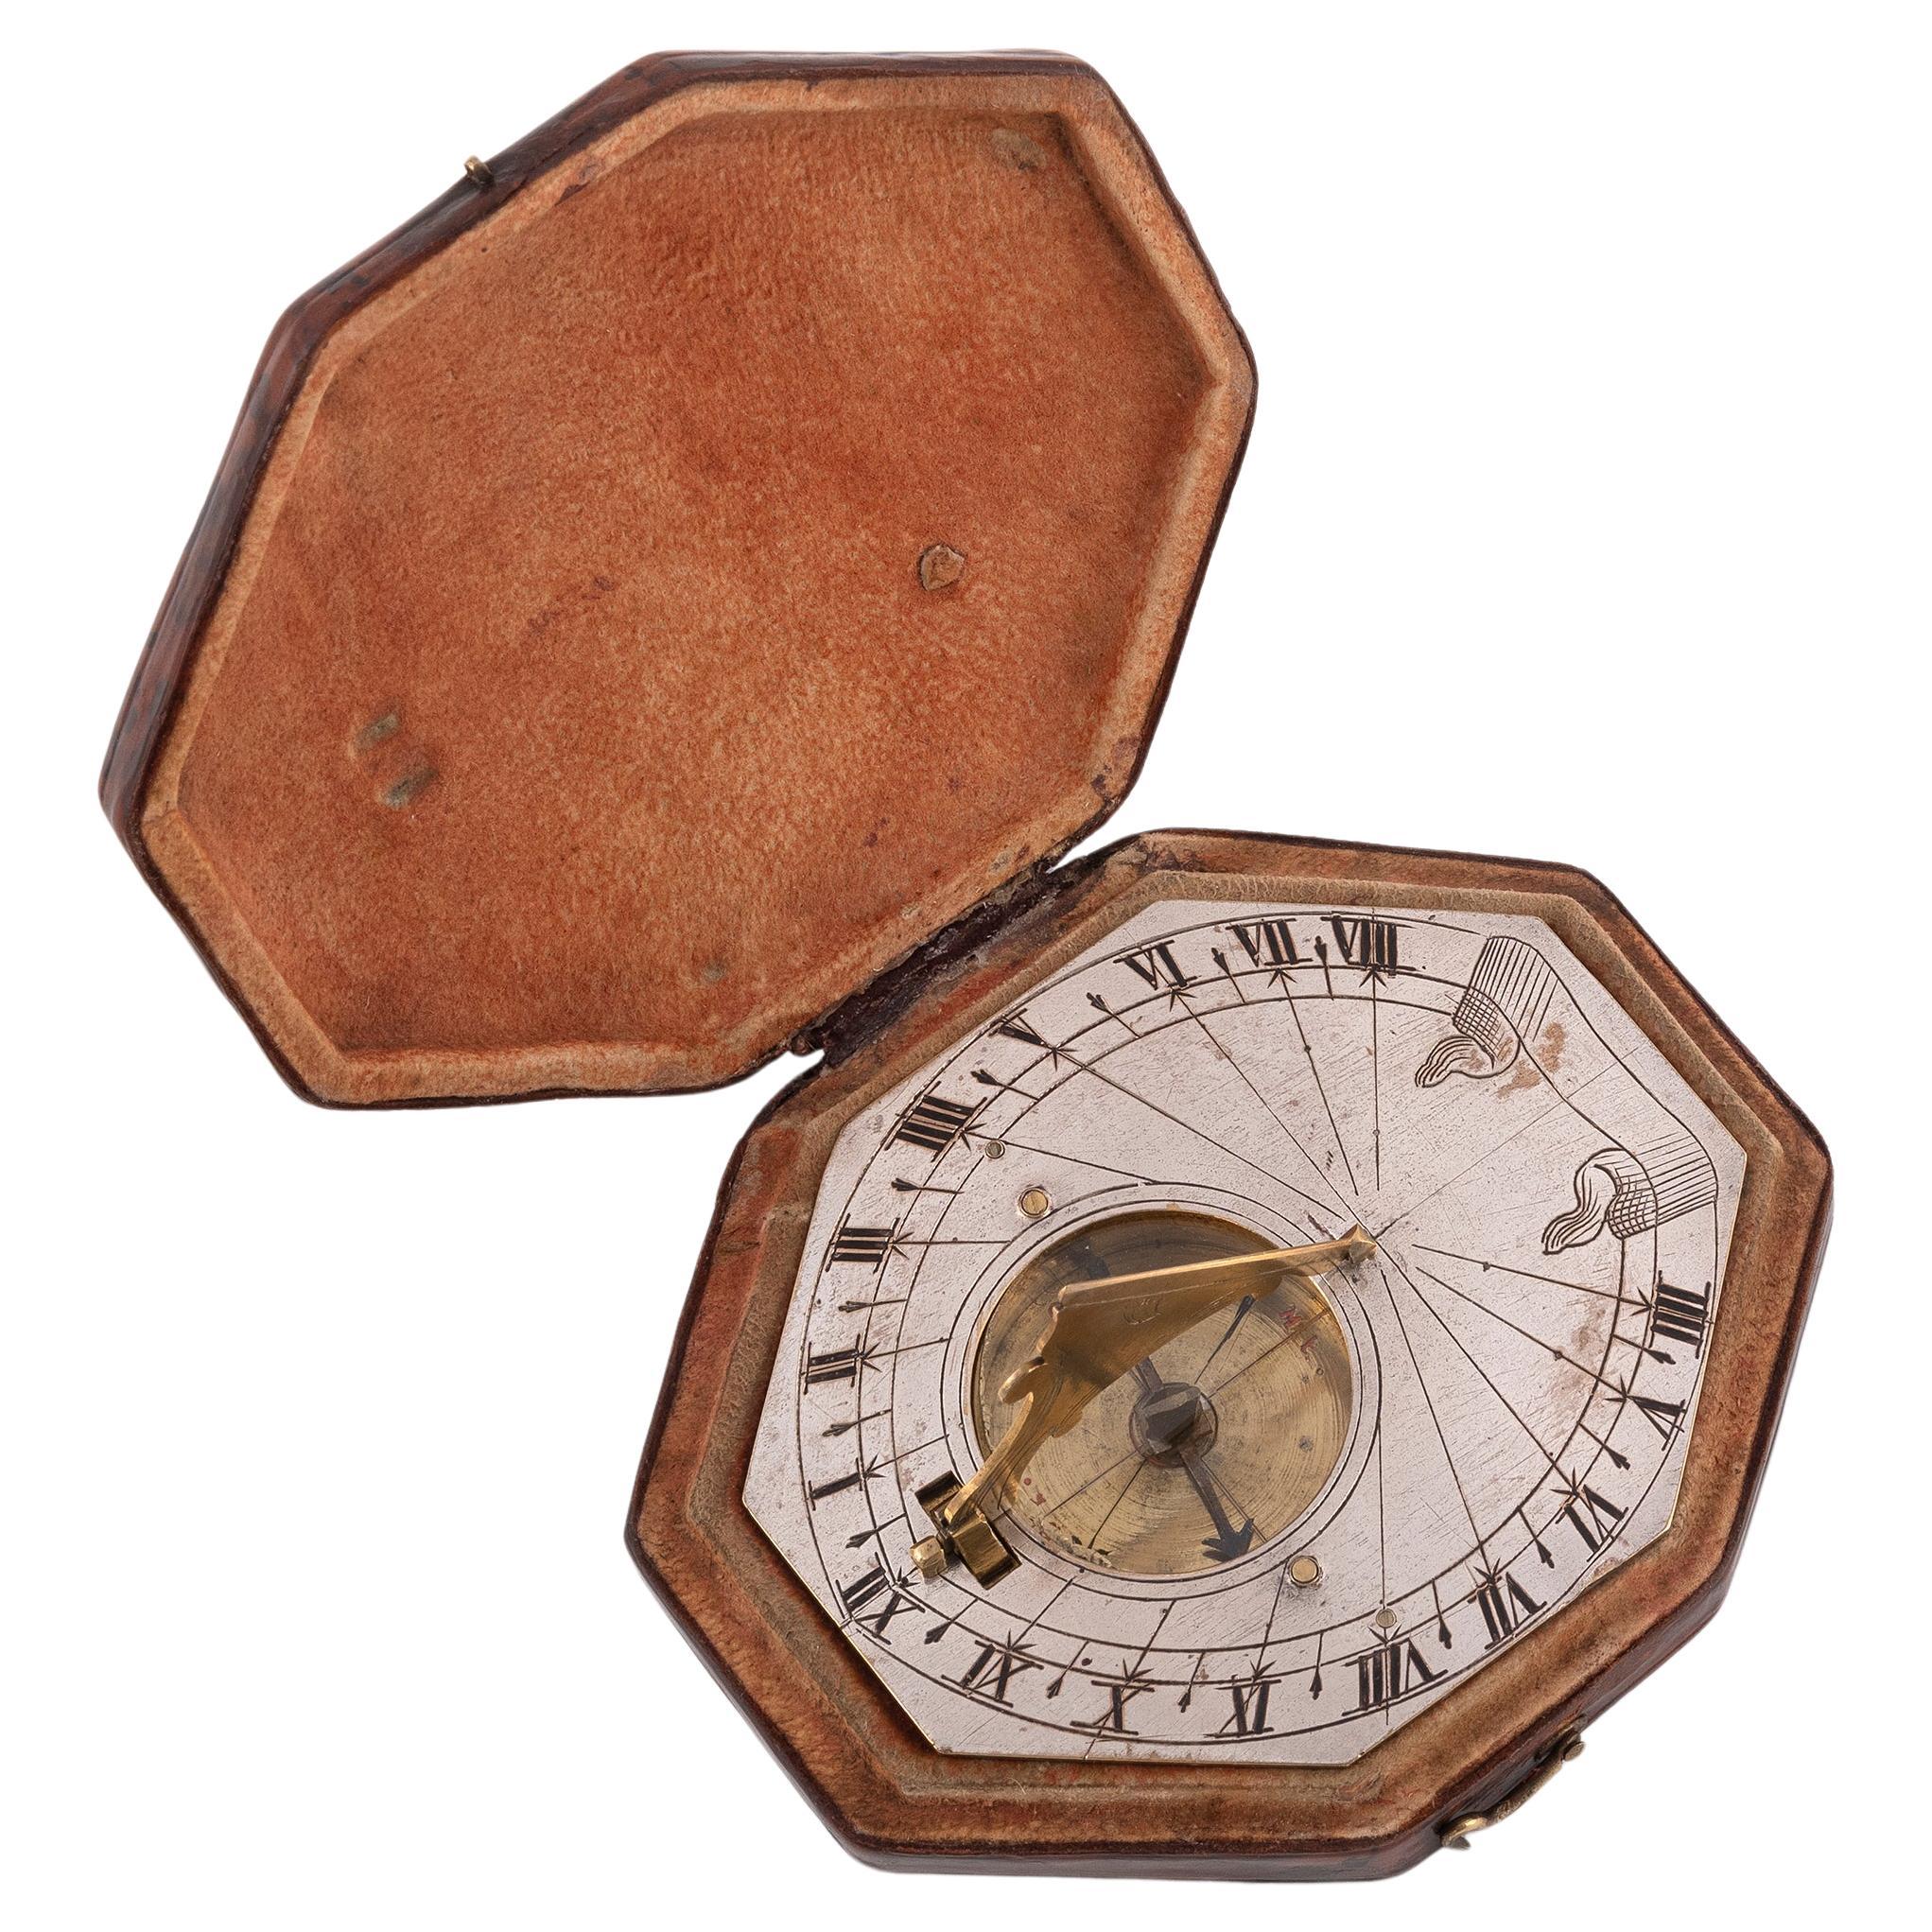 Cooper's Sundial Compass